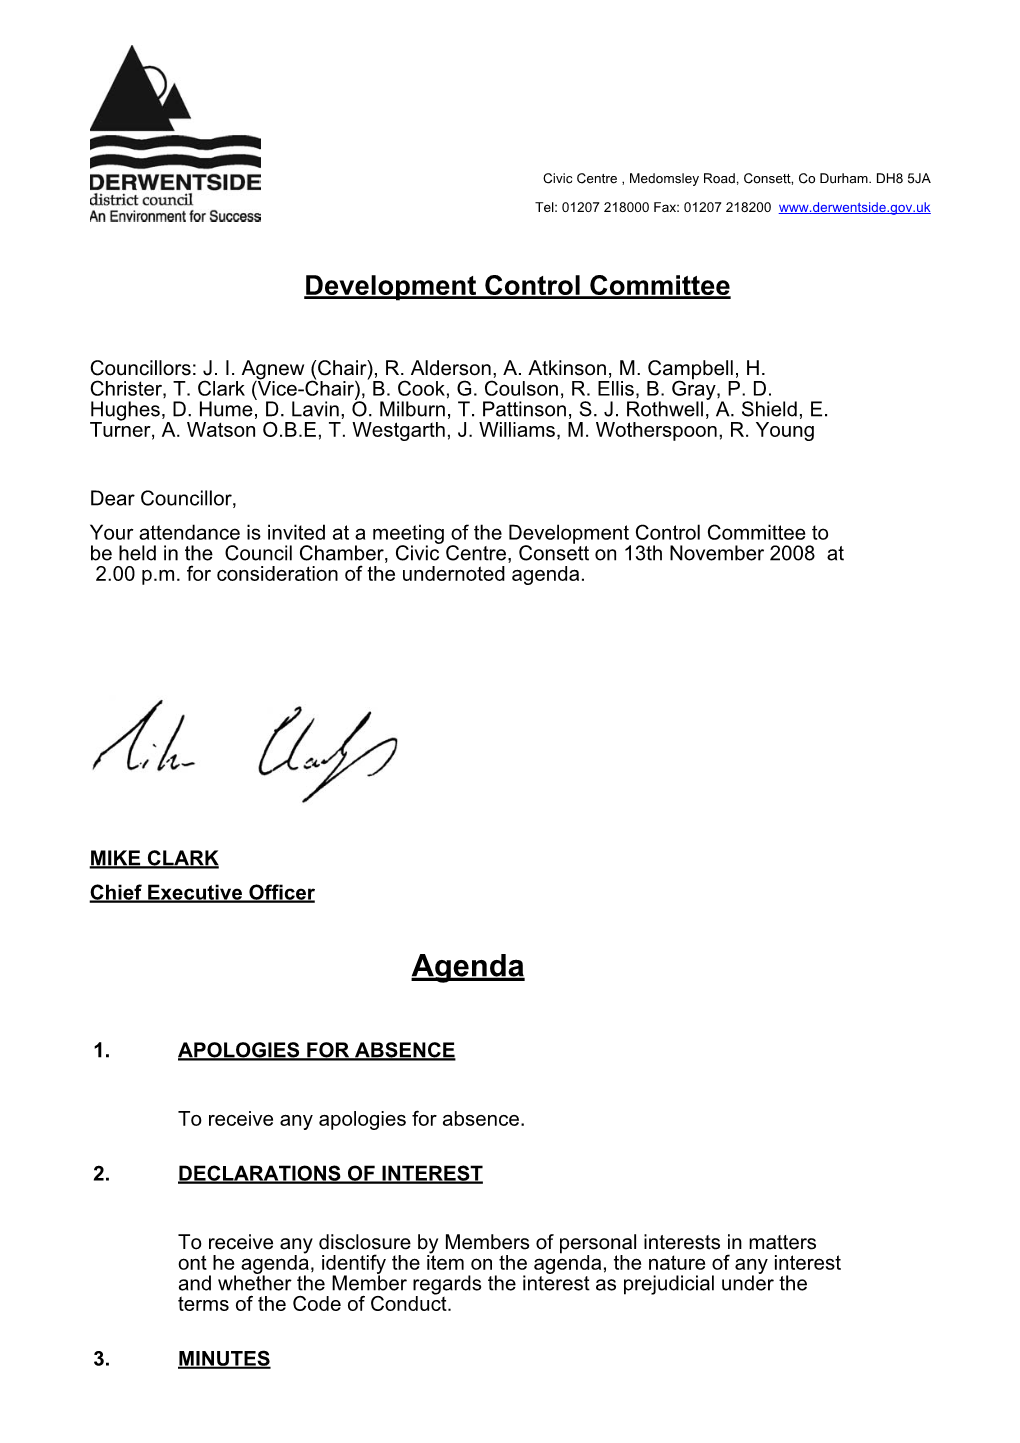 Development Control Committee 13 11 08